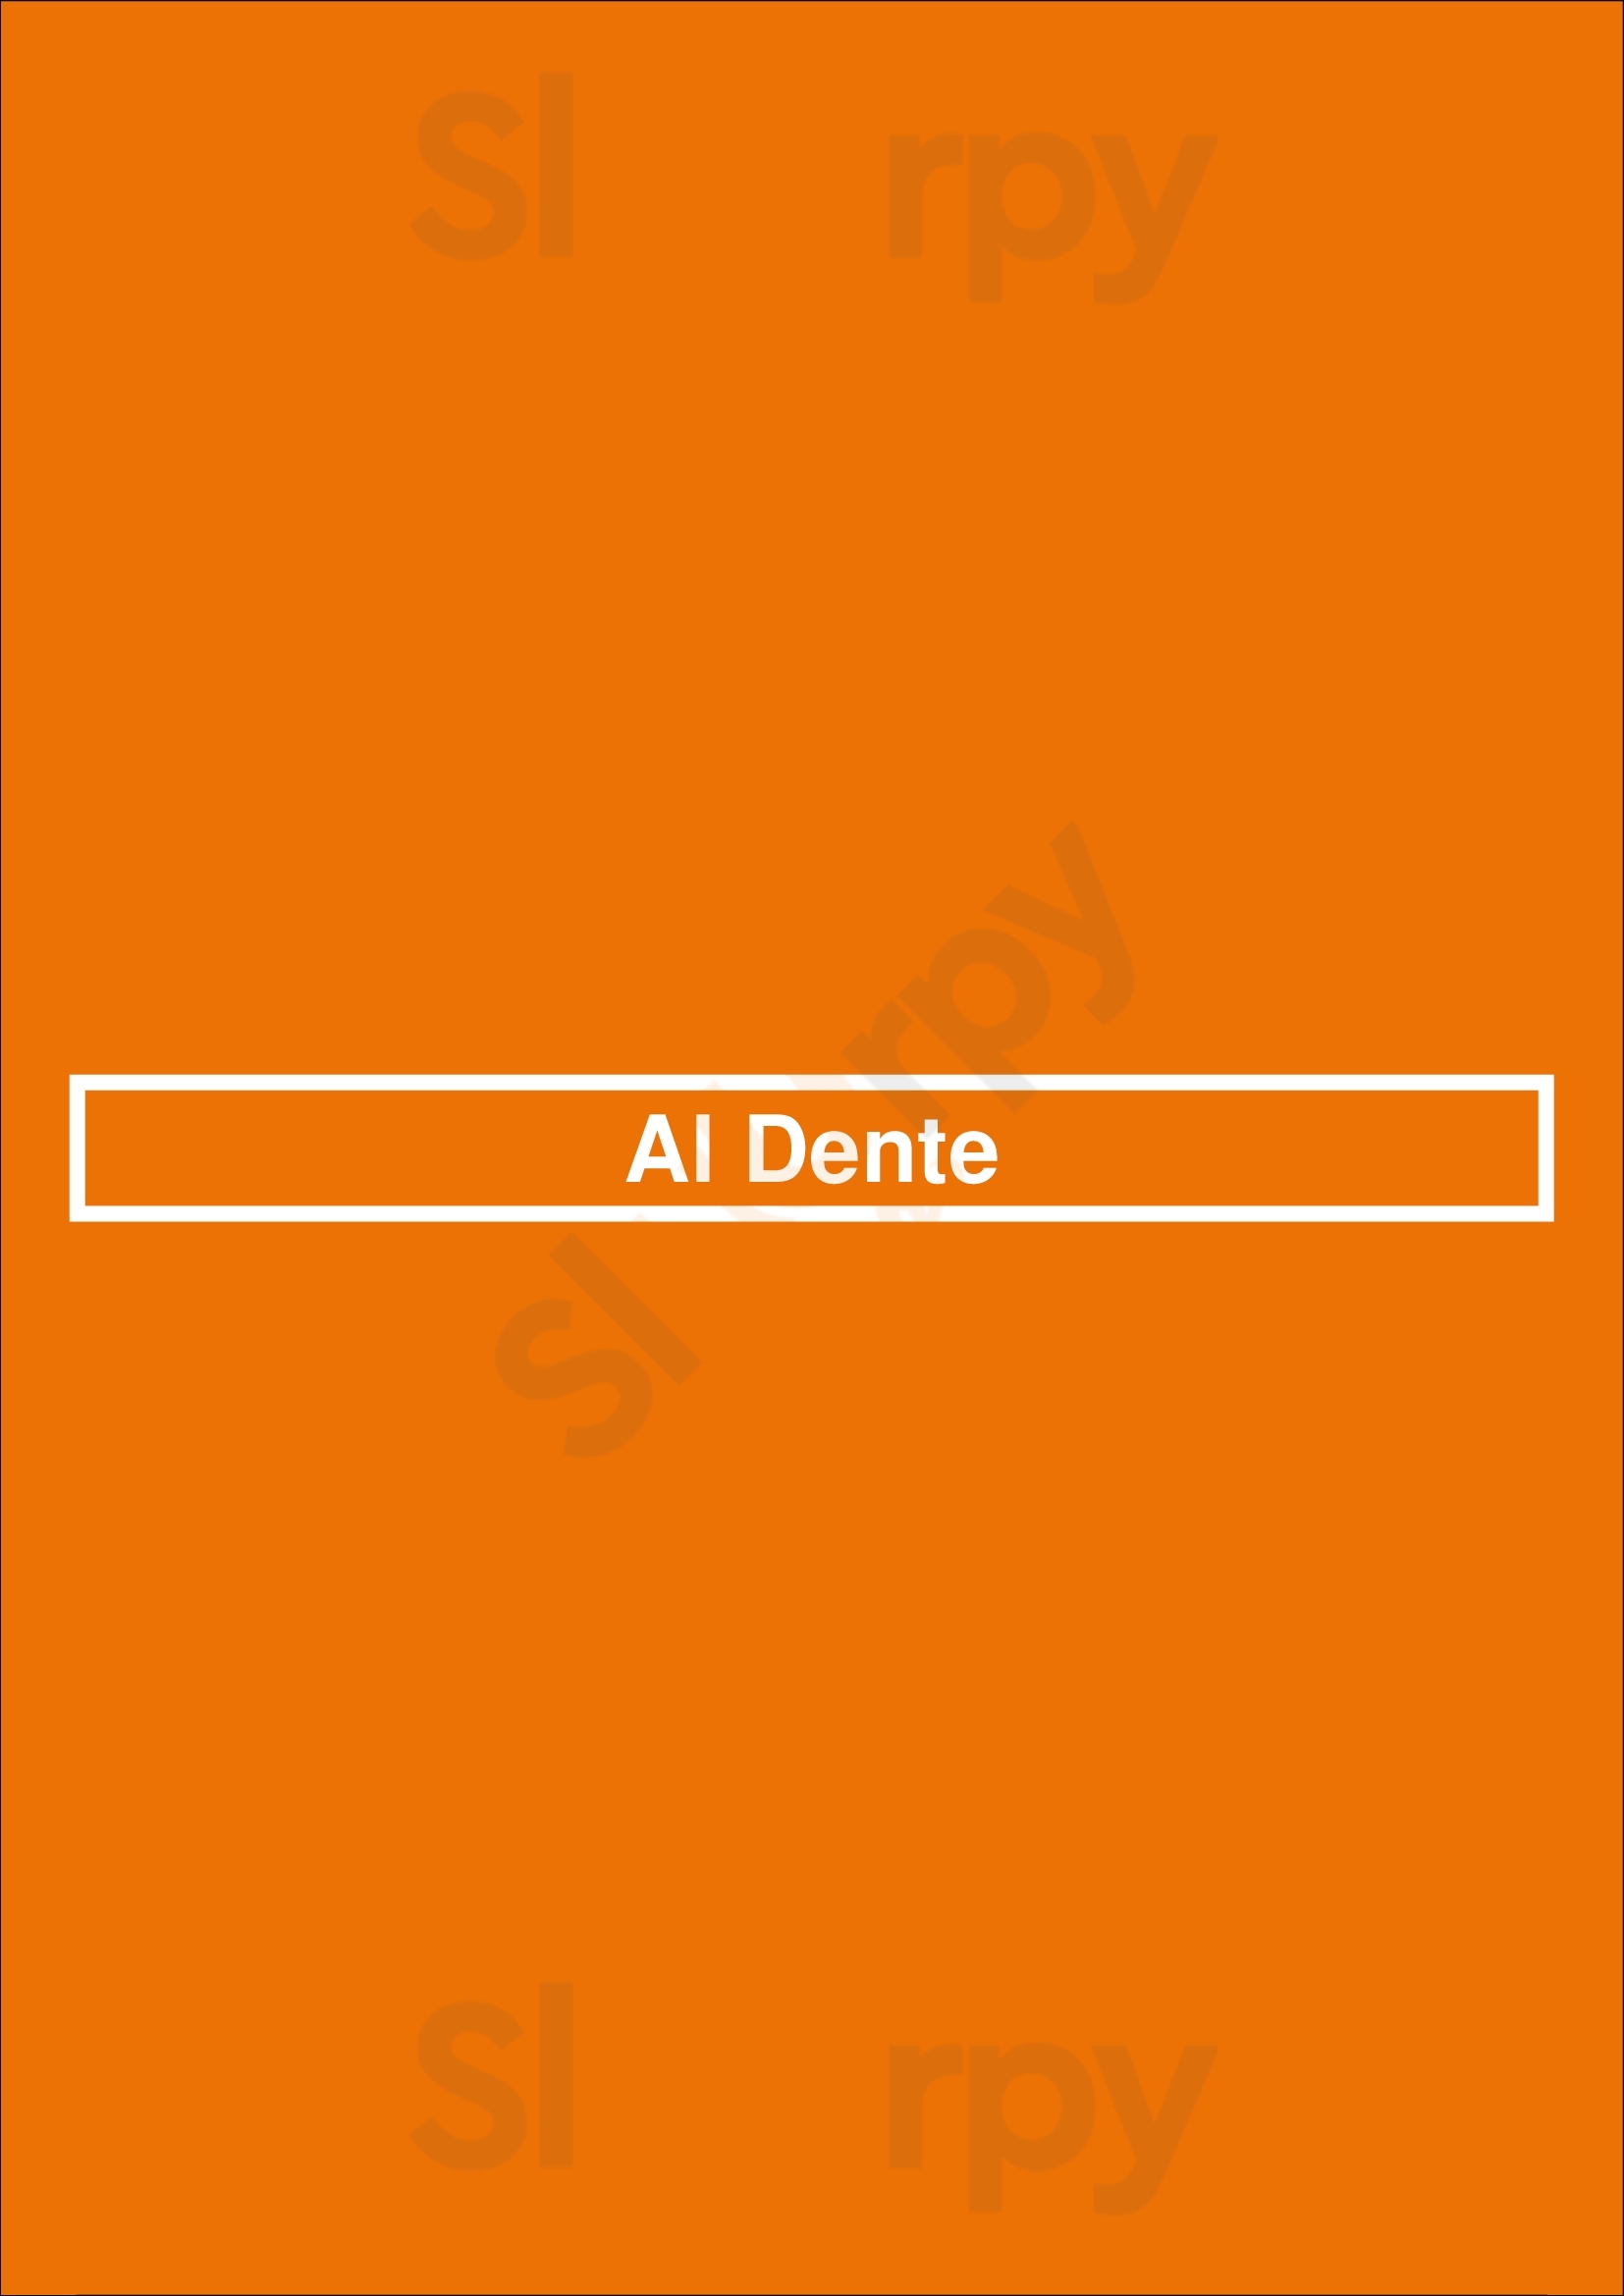 Al Dente Breda Menu - 1